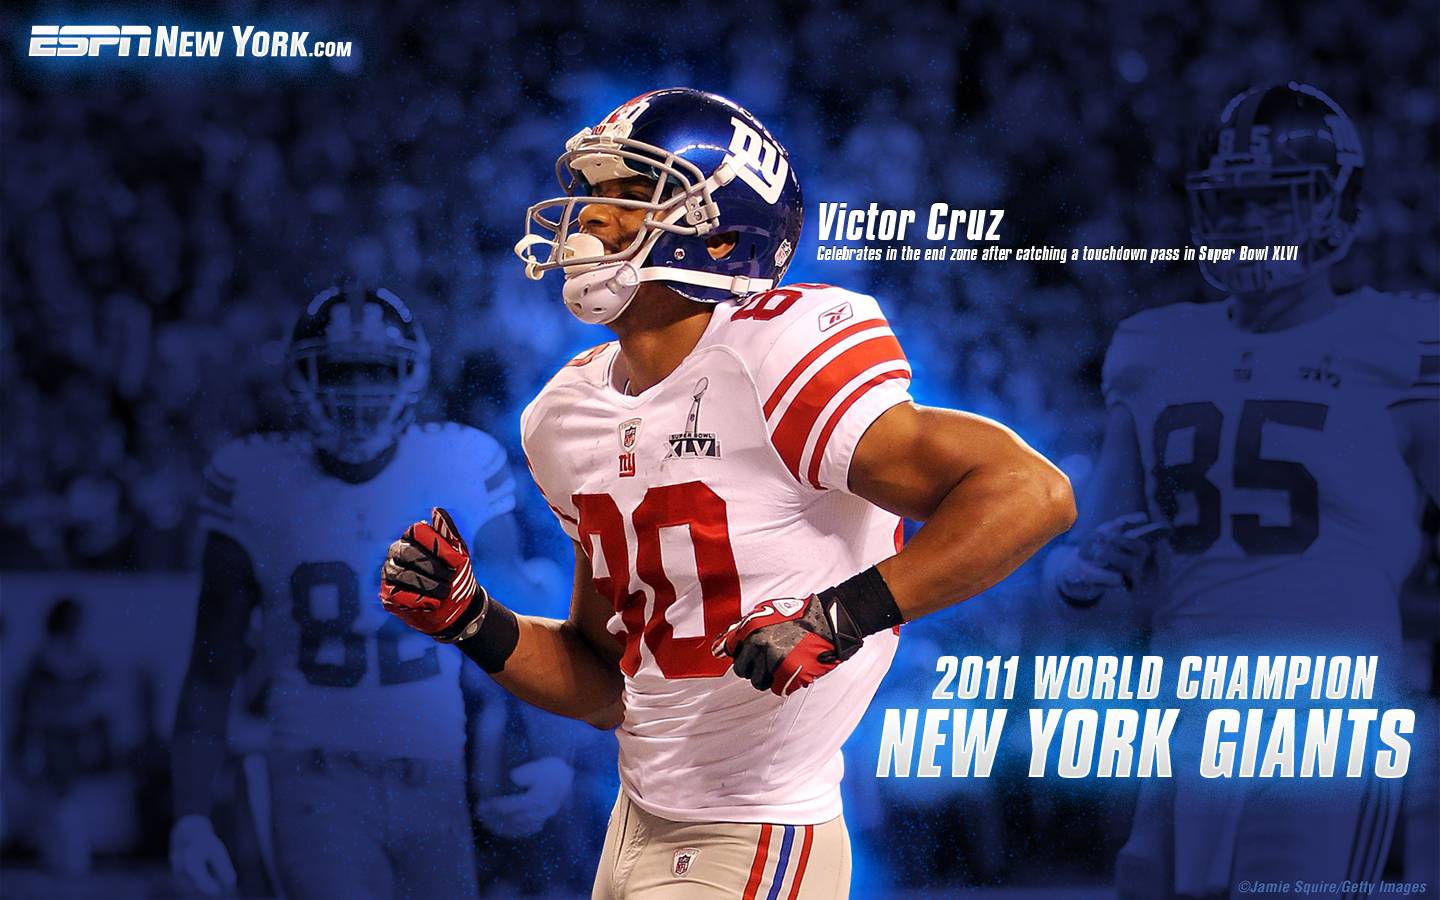  New York Giants desktop image New York Giants wallpapers 1440x900